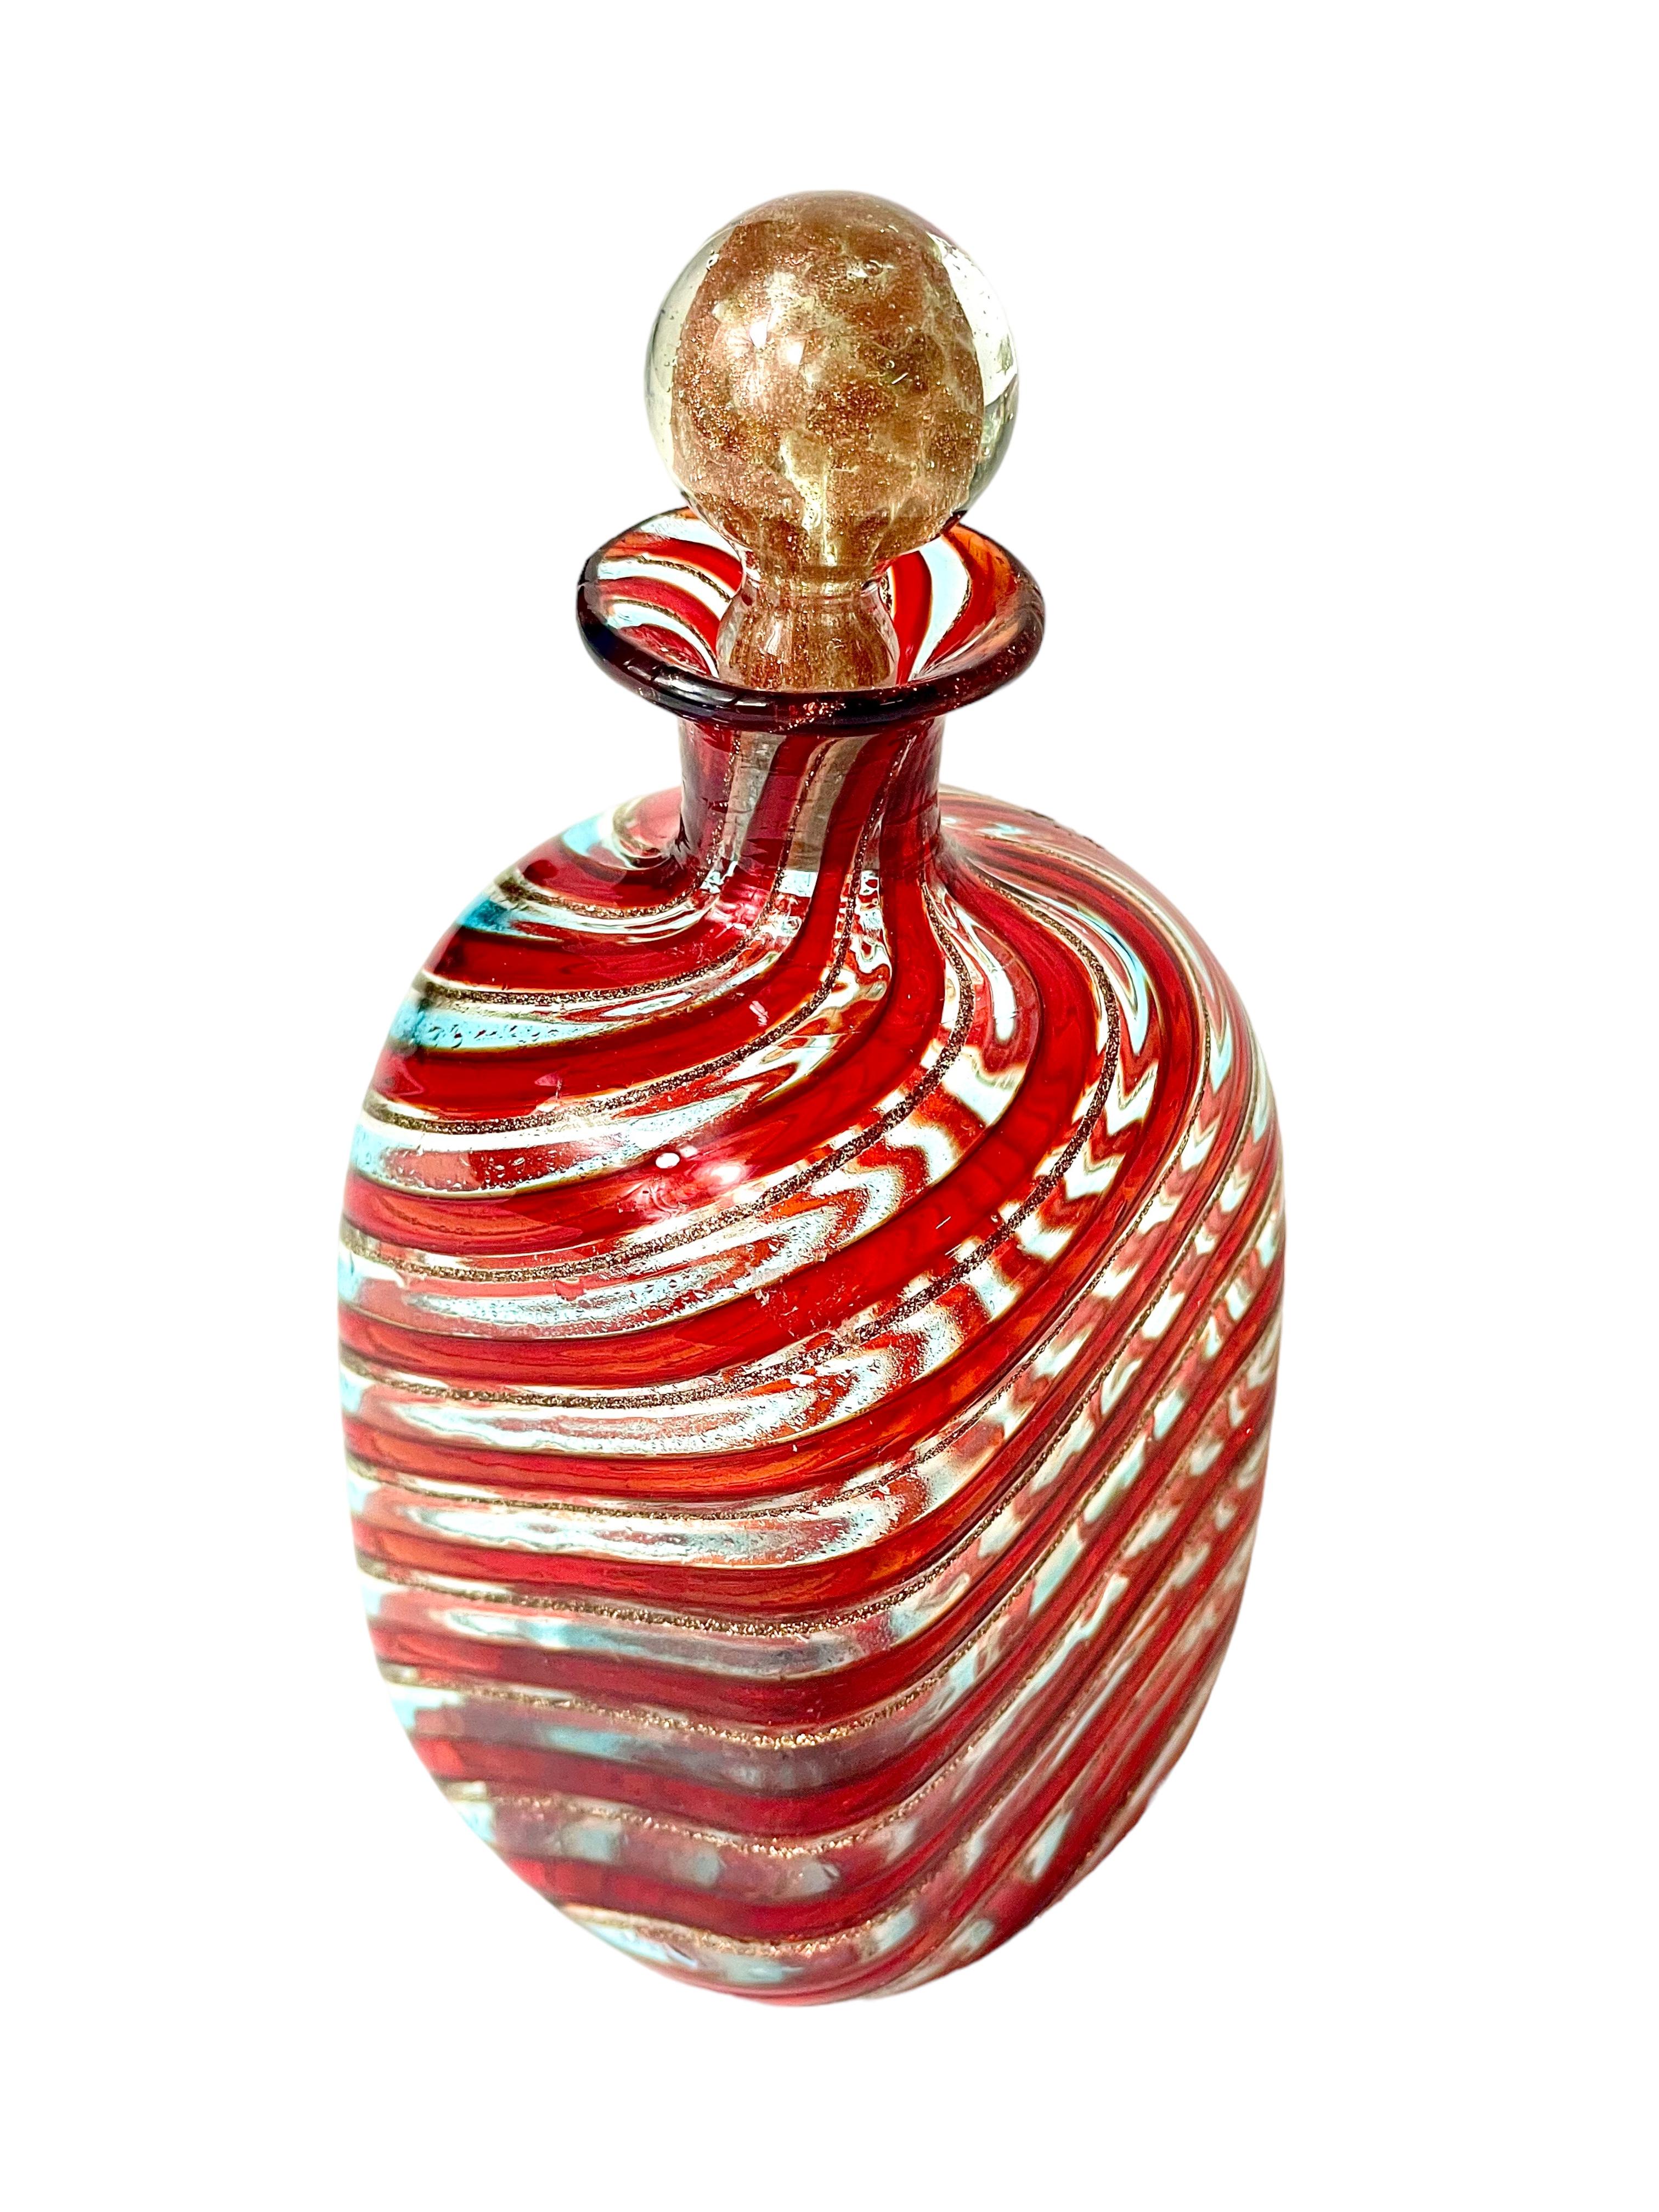 Verre Vieux flacon de parfum en verre de Murano avec bouchon